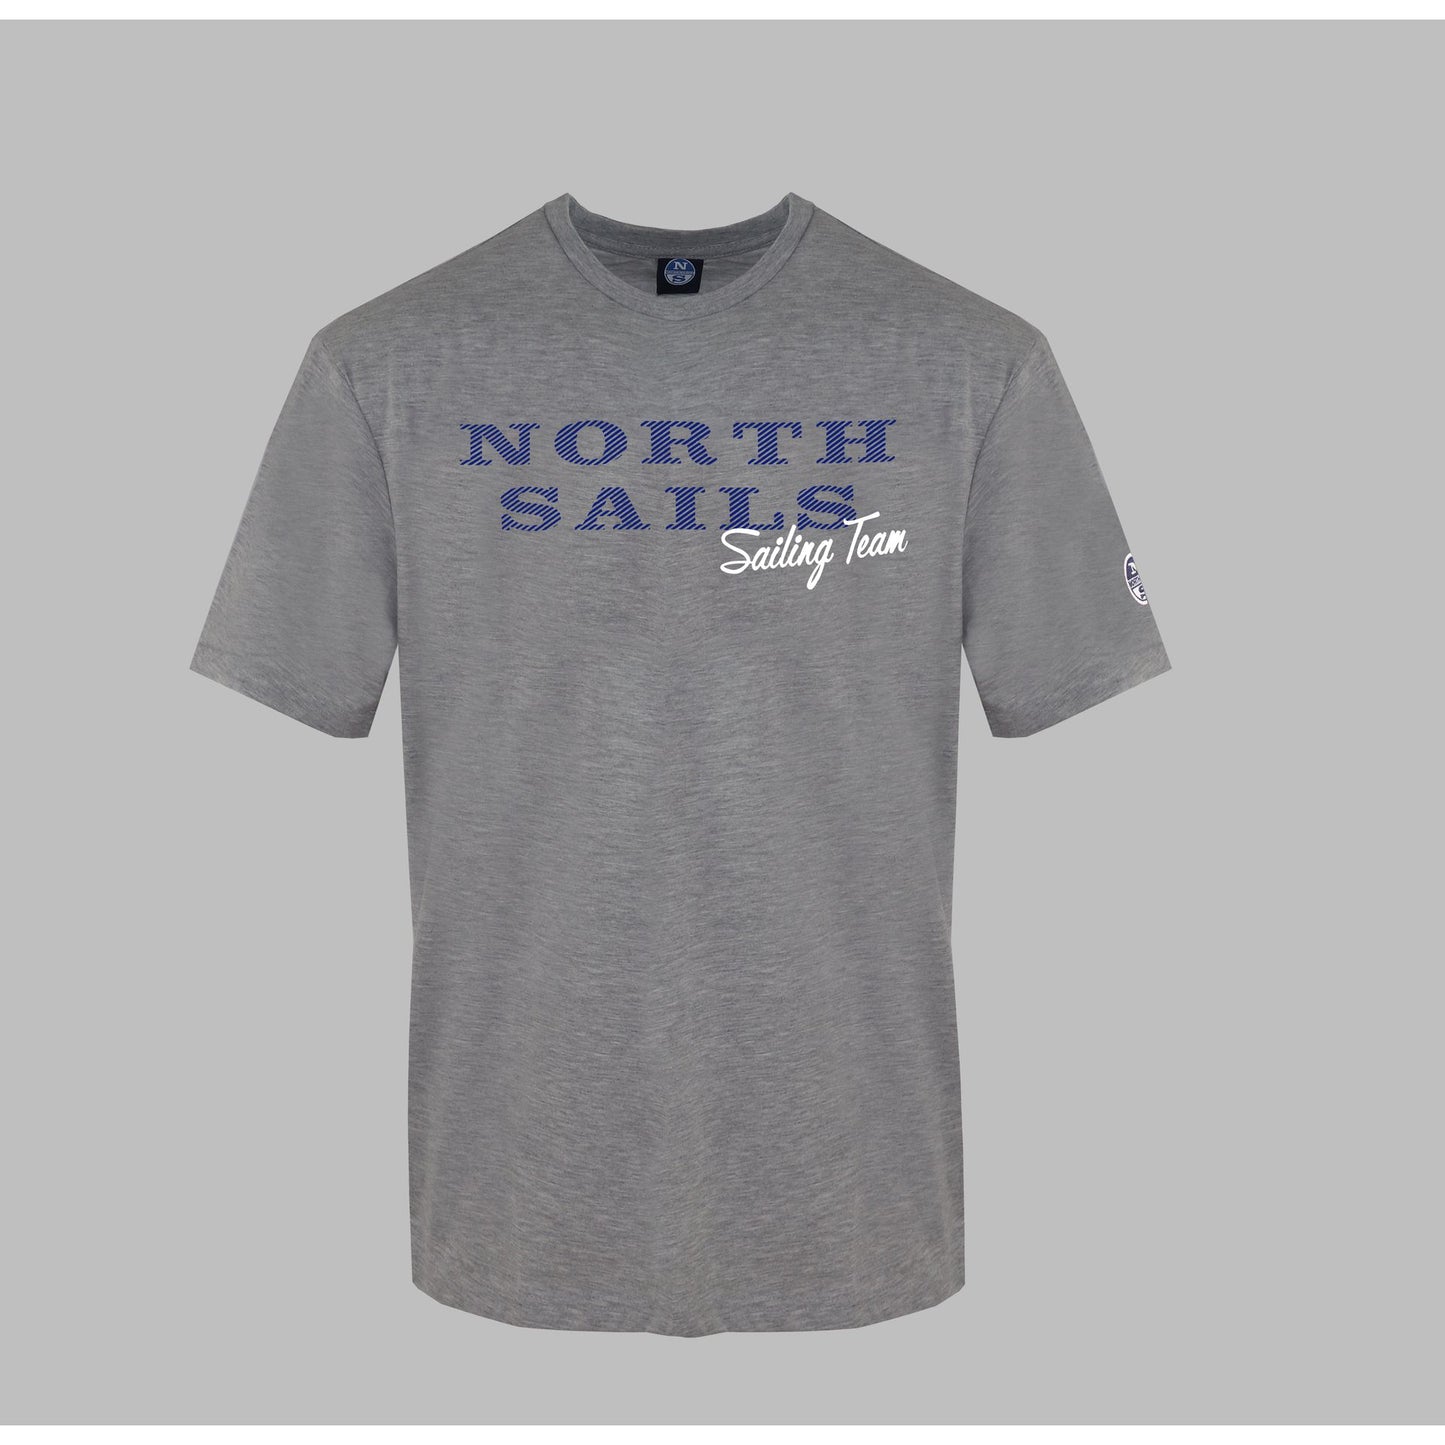 North Sails T-shirts